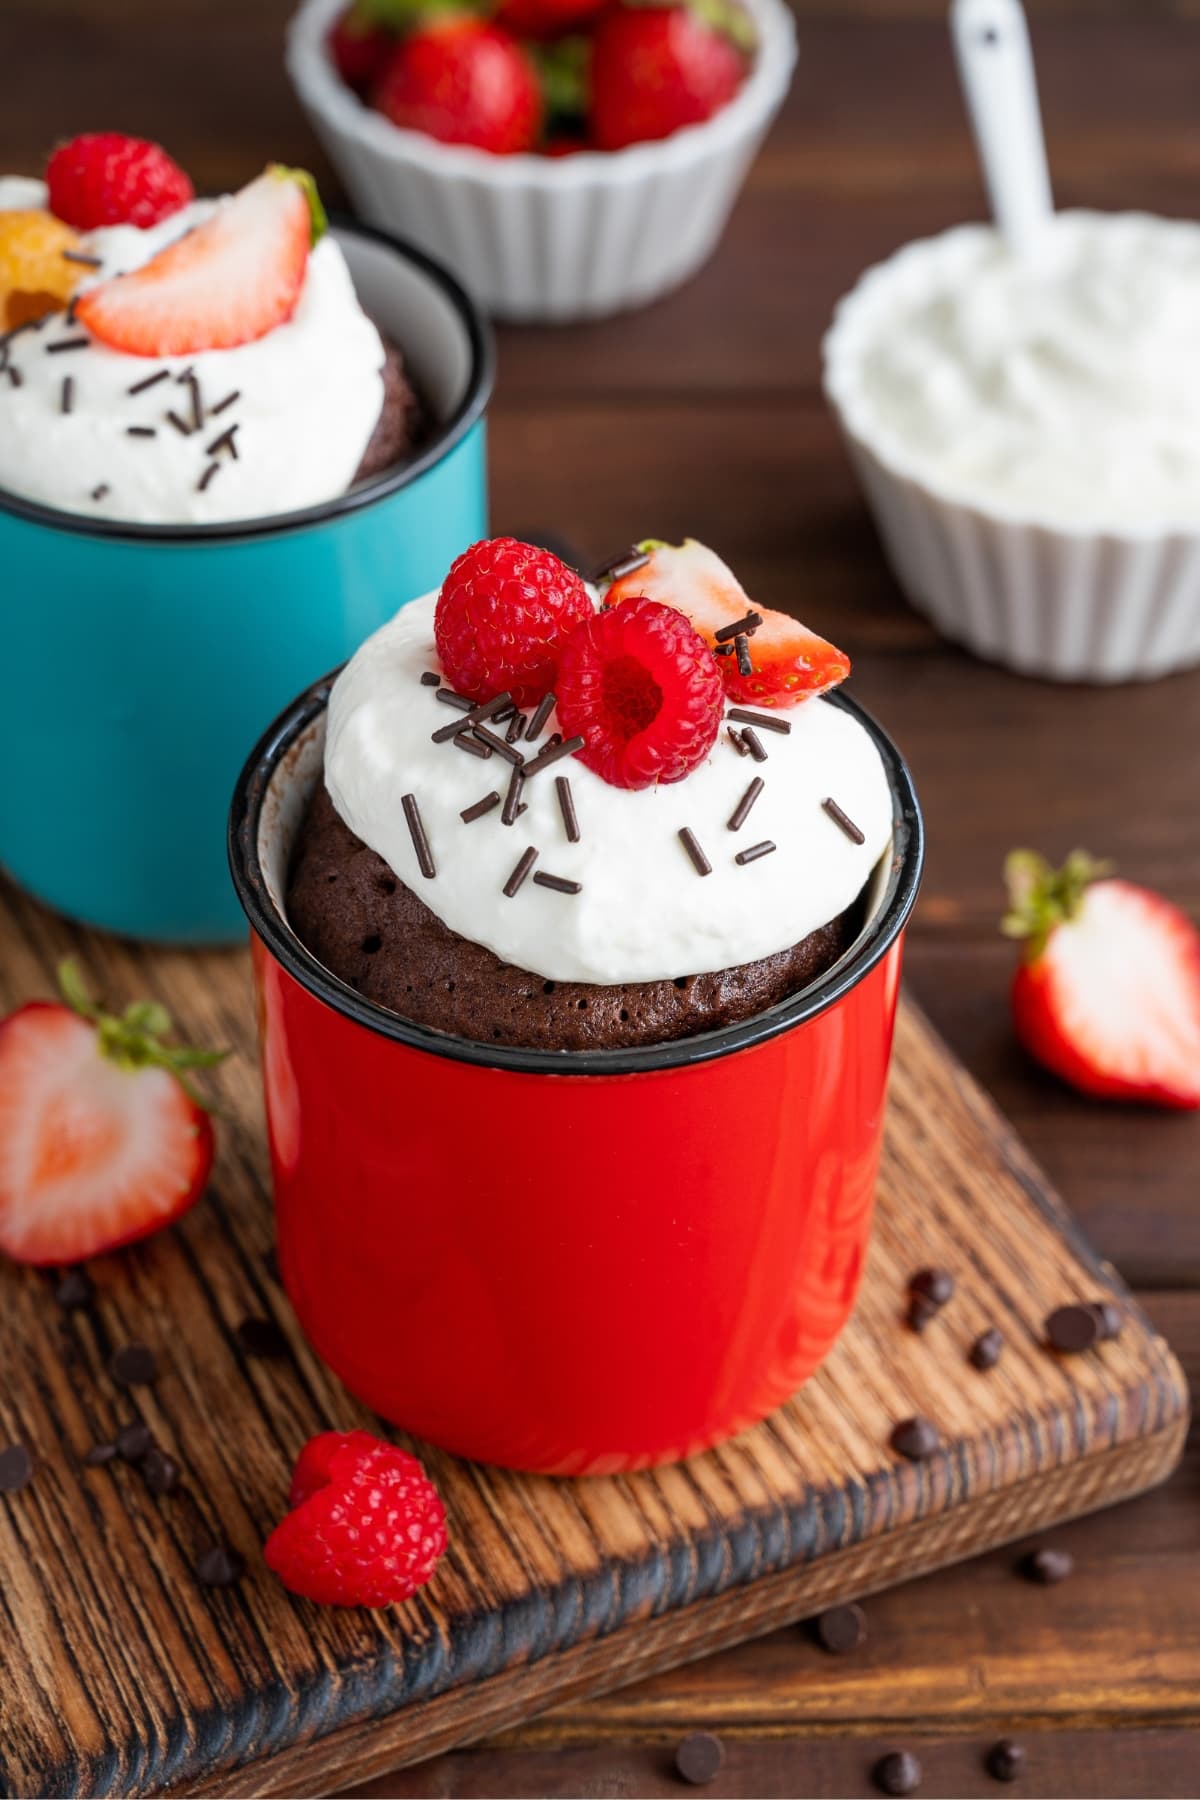 Homemade Chocolate Mug Cake with Raspberries and Whipped Cream